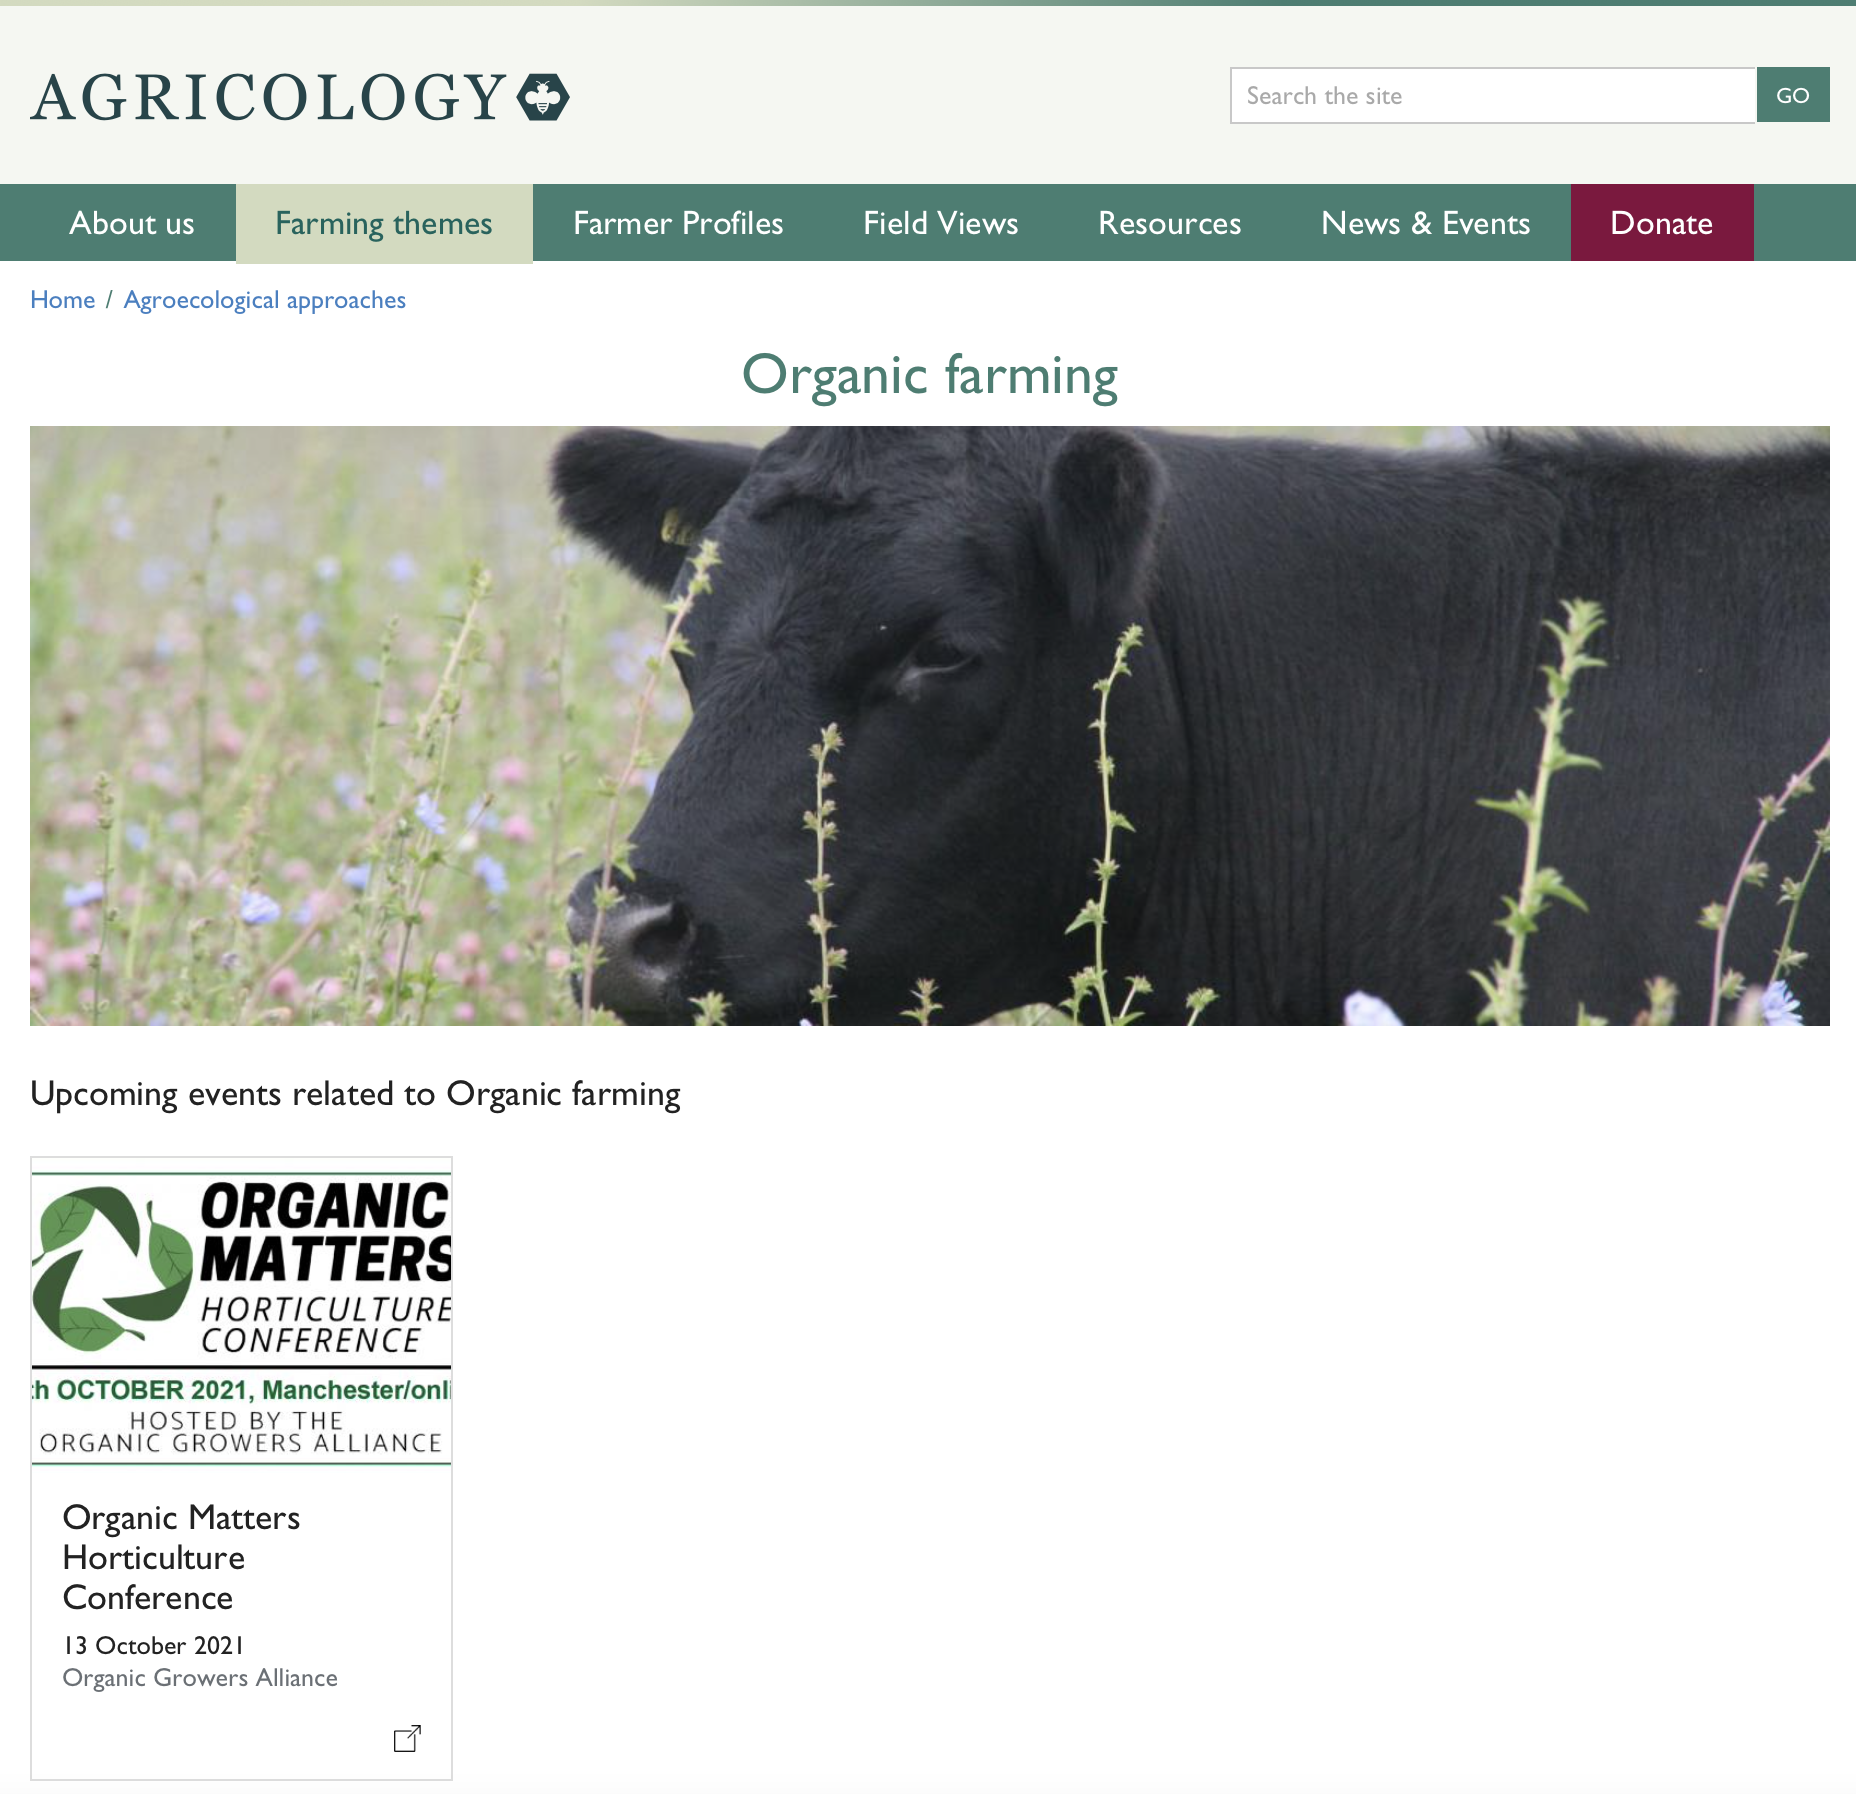 Agricology Farming theme: Organic Farming